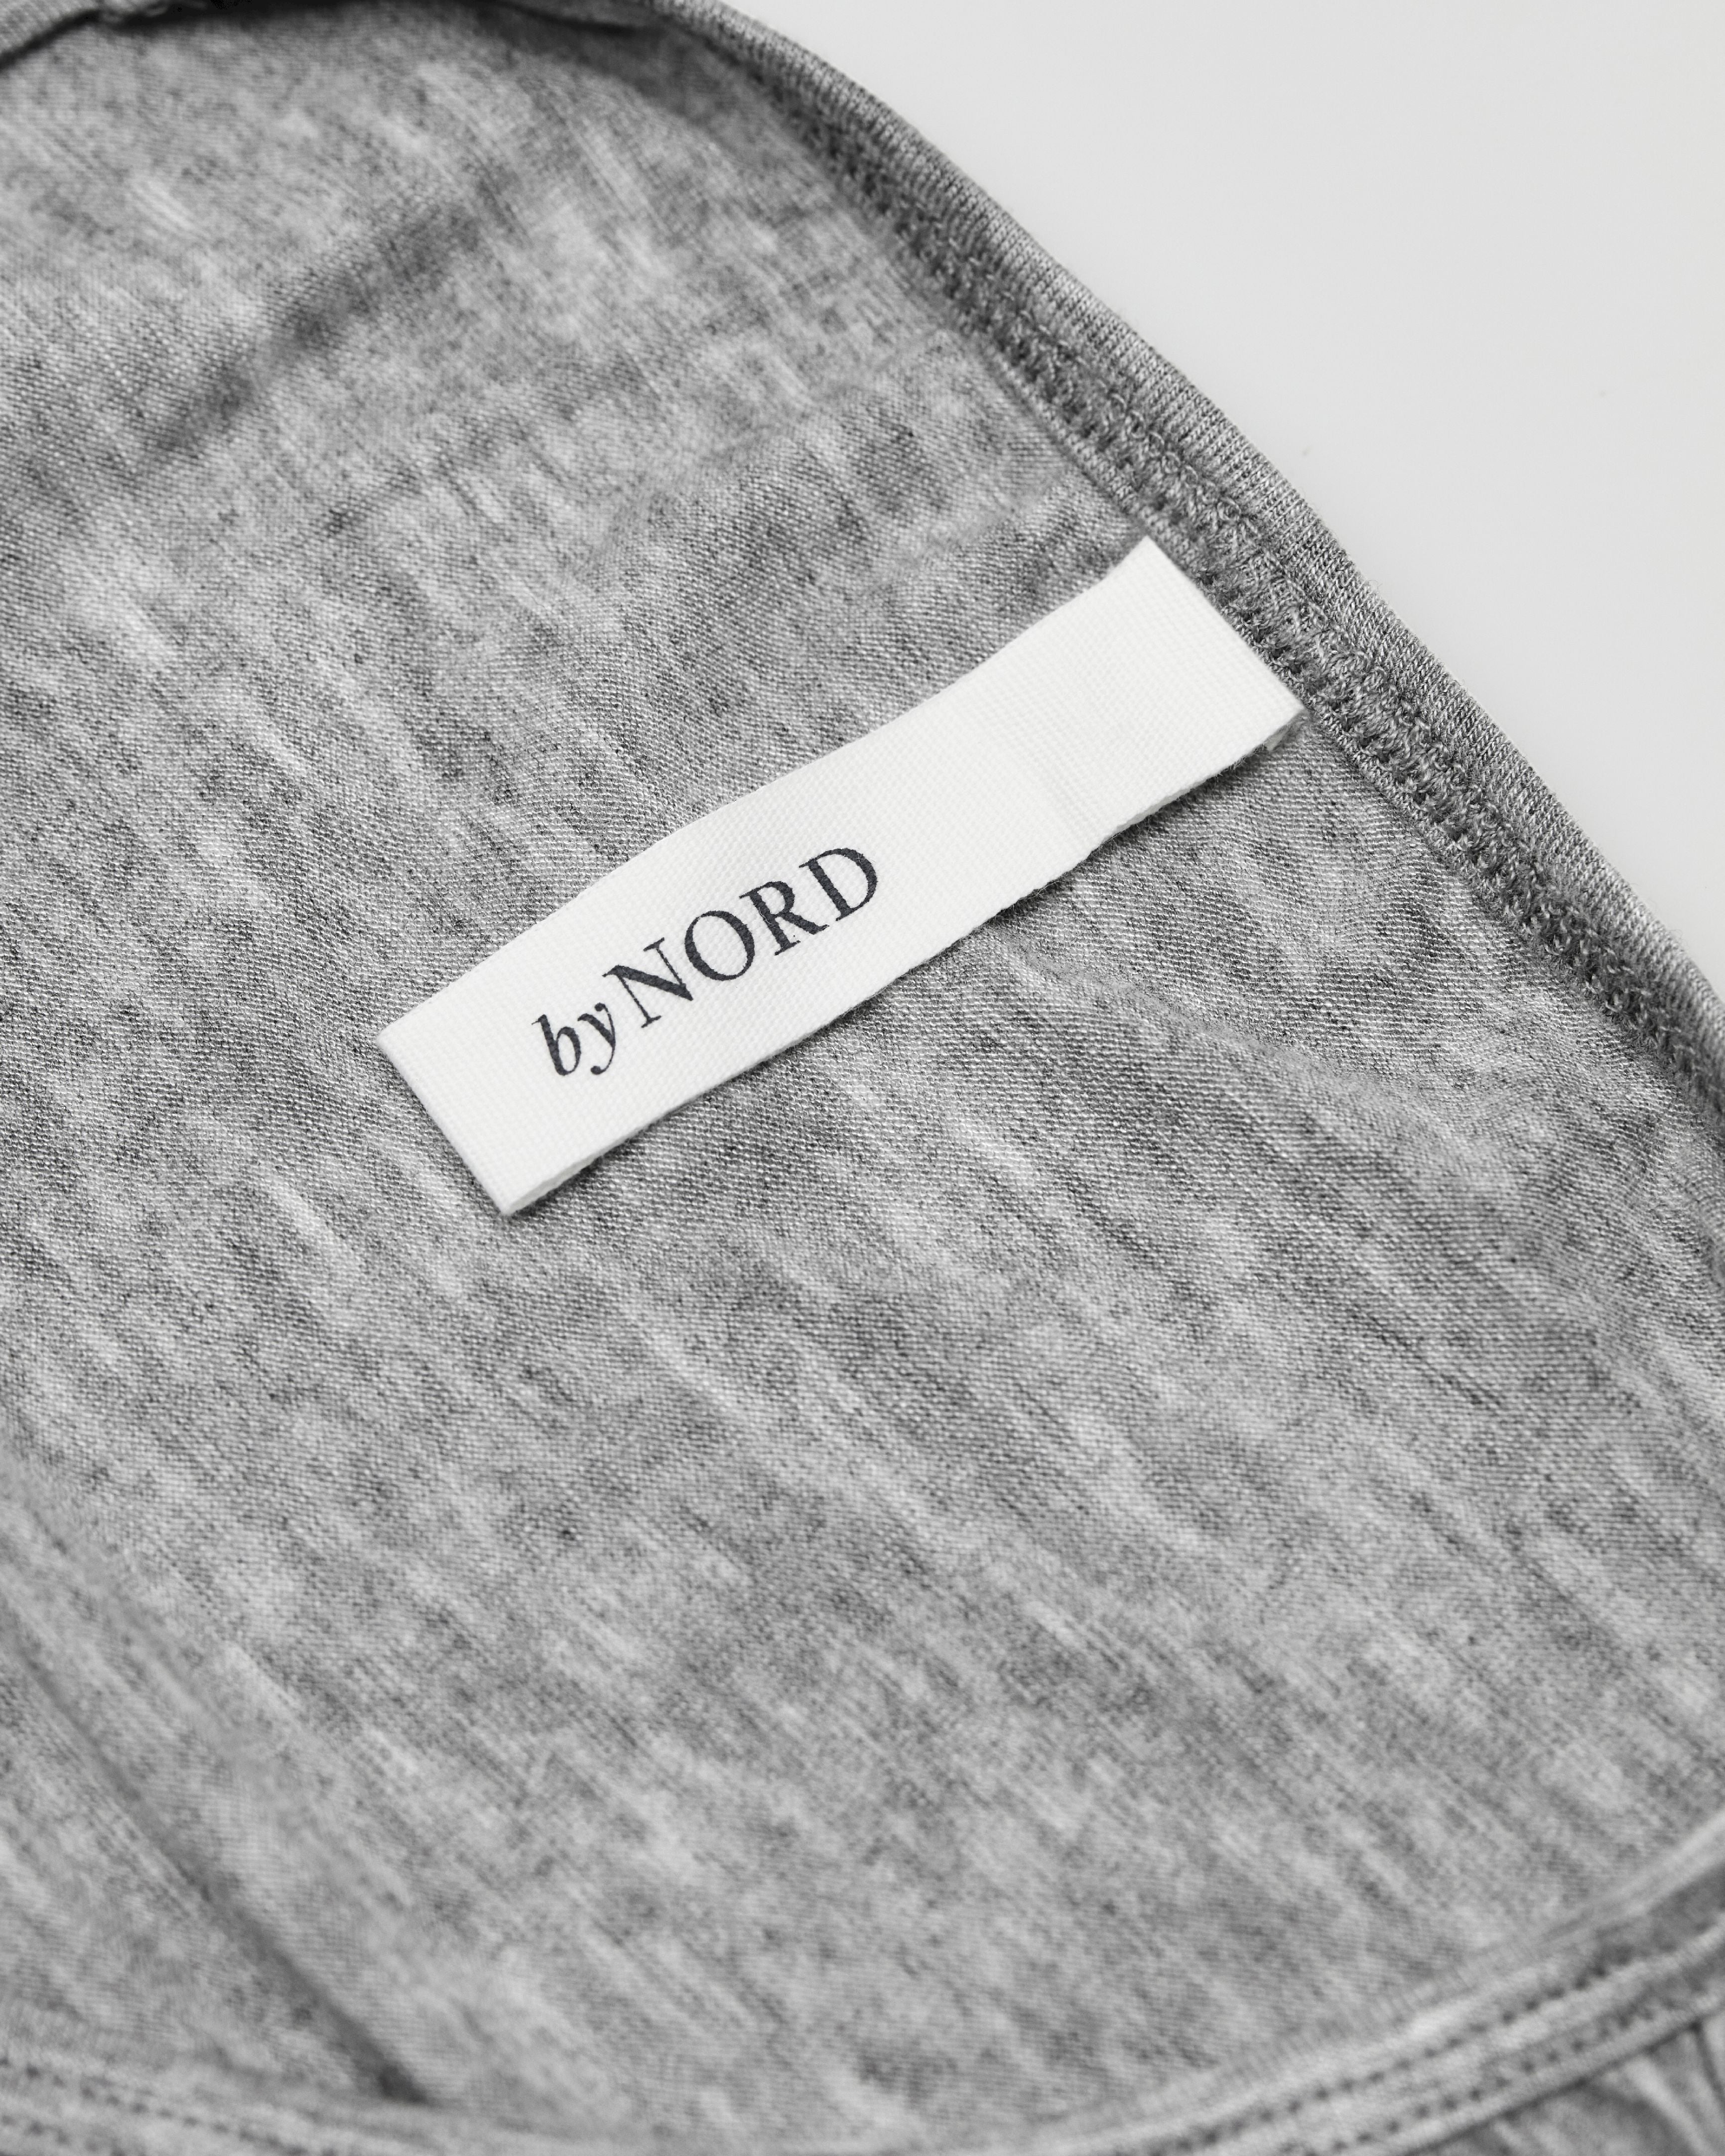 Eftir Nord Winter Astrid Loungewear L/XL, pils